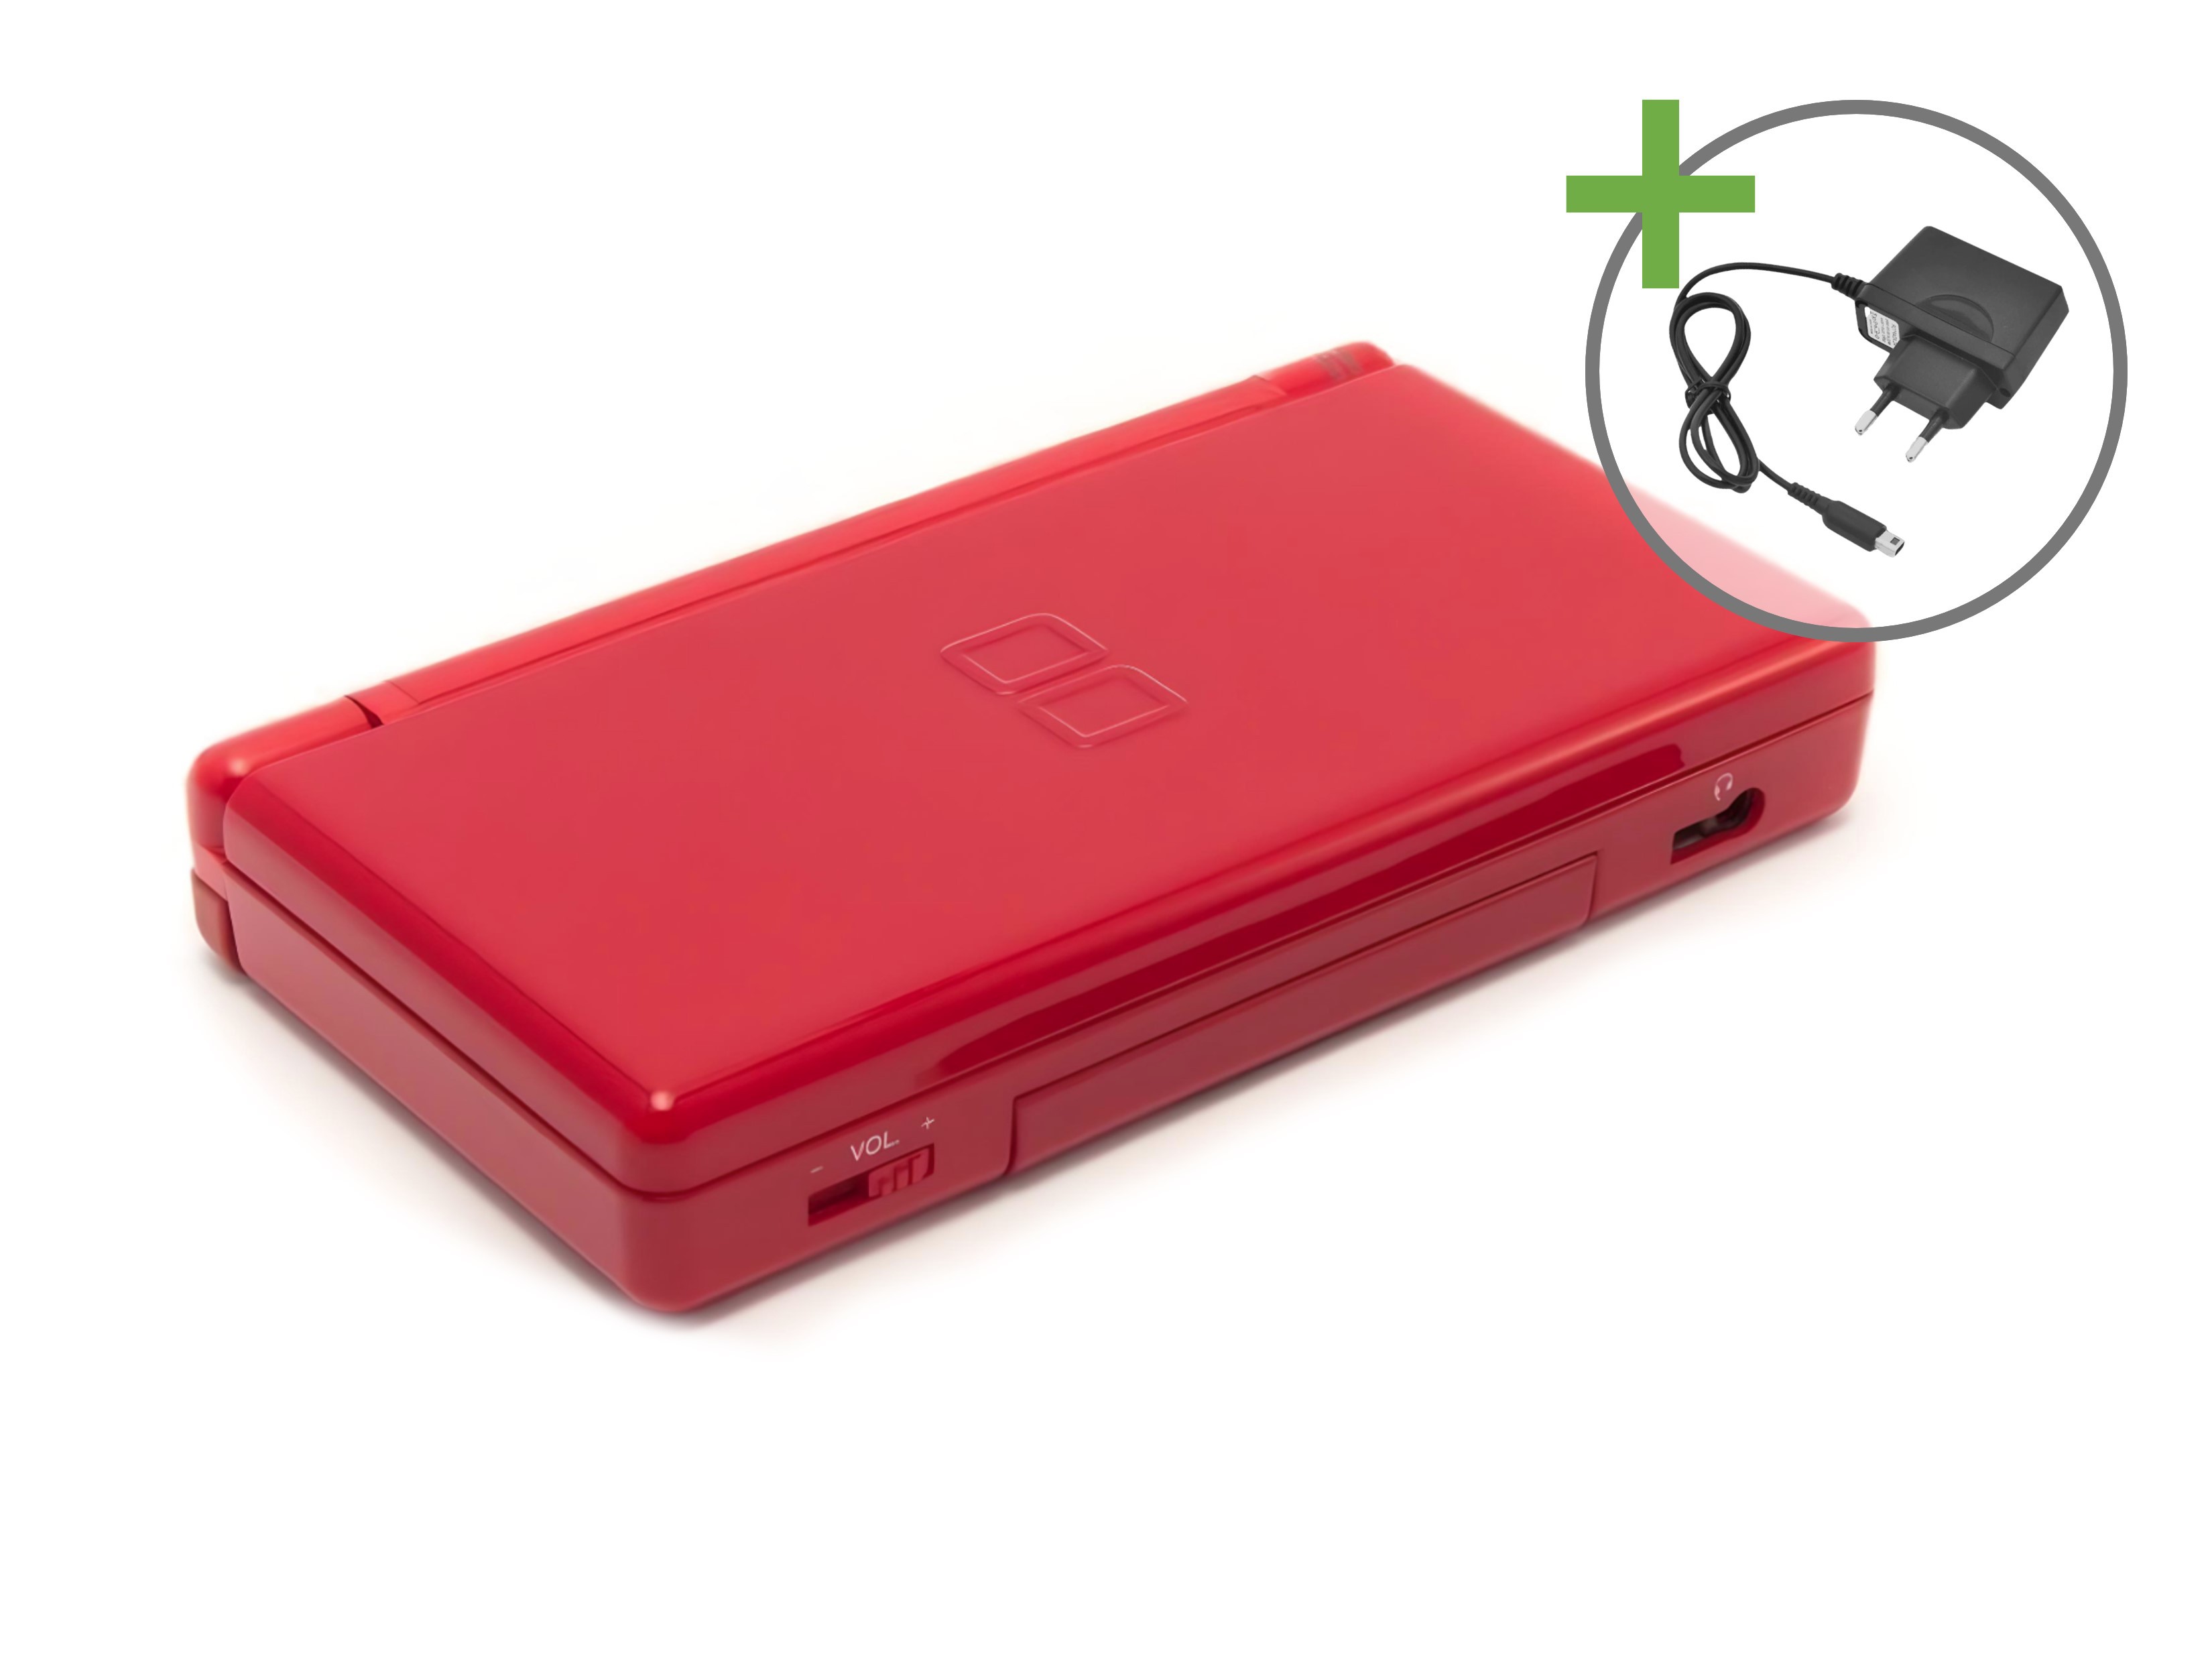 Nintendo DS Lite - Red - Nintendo DS Hardware - 2